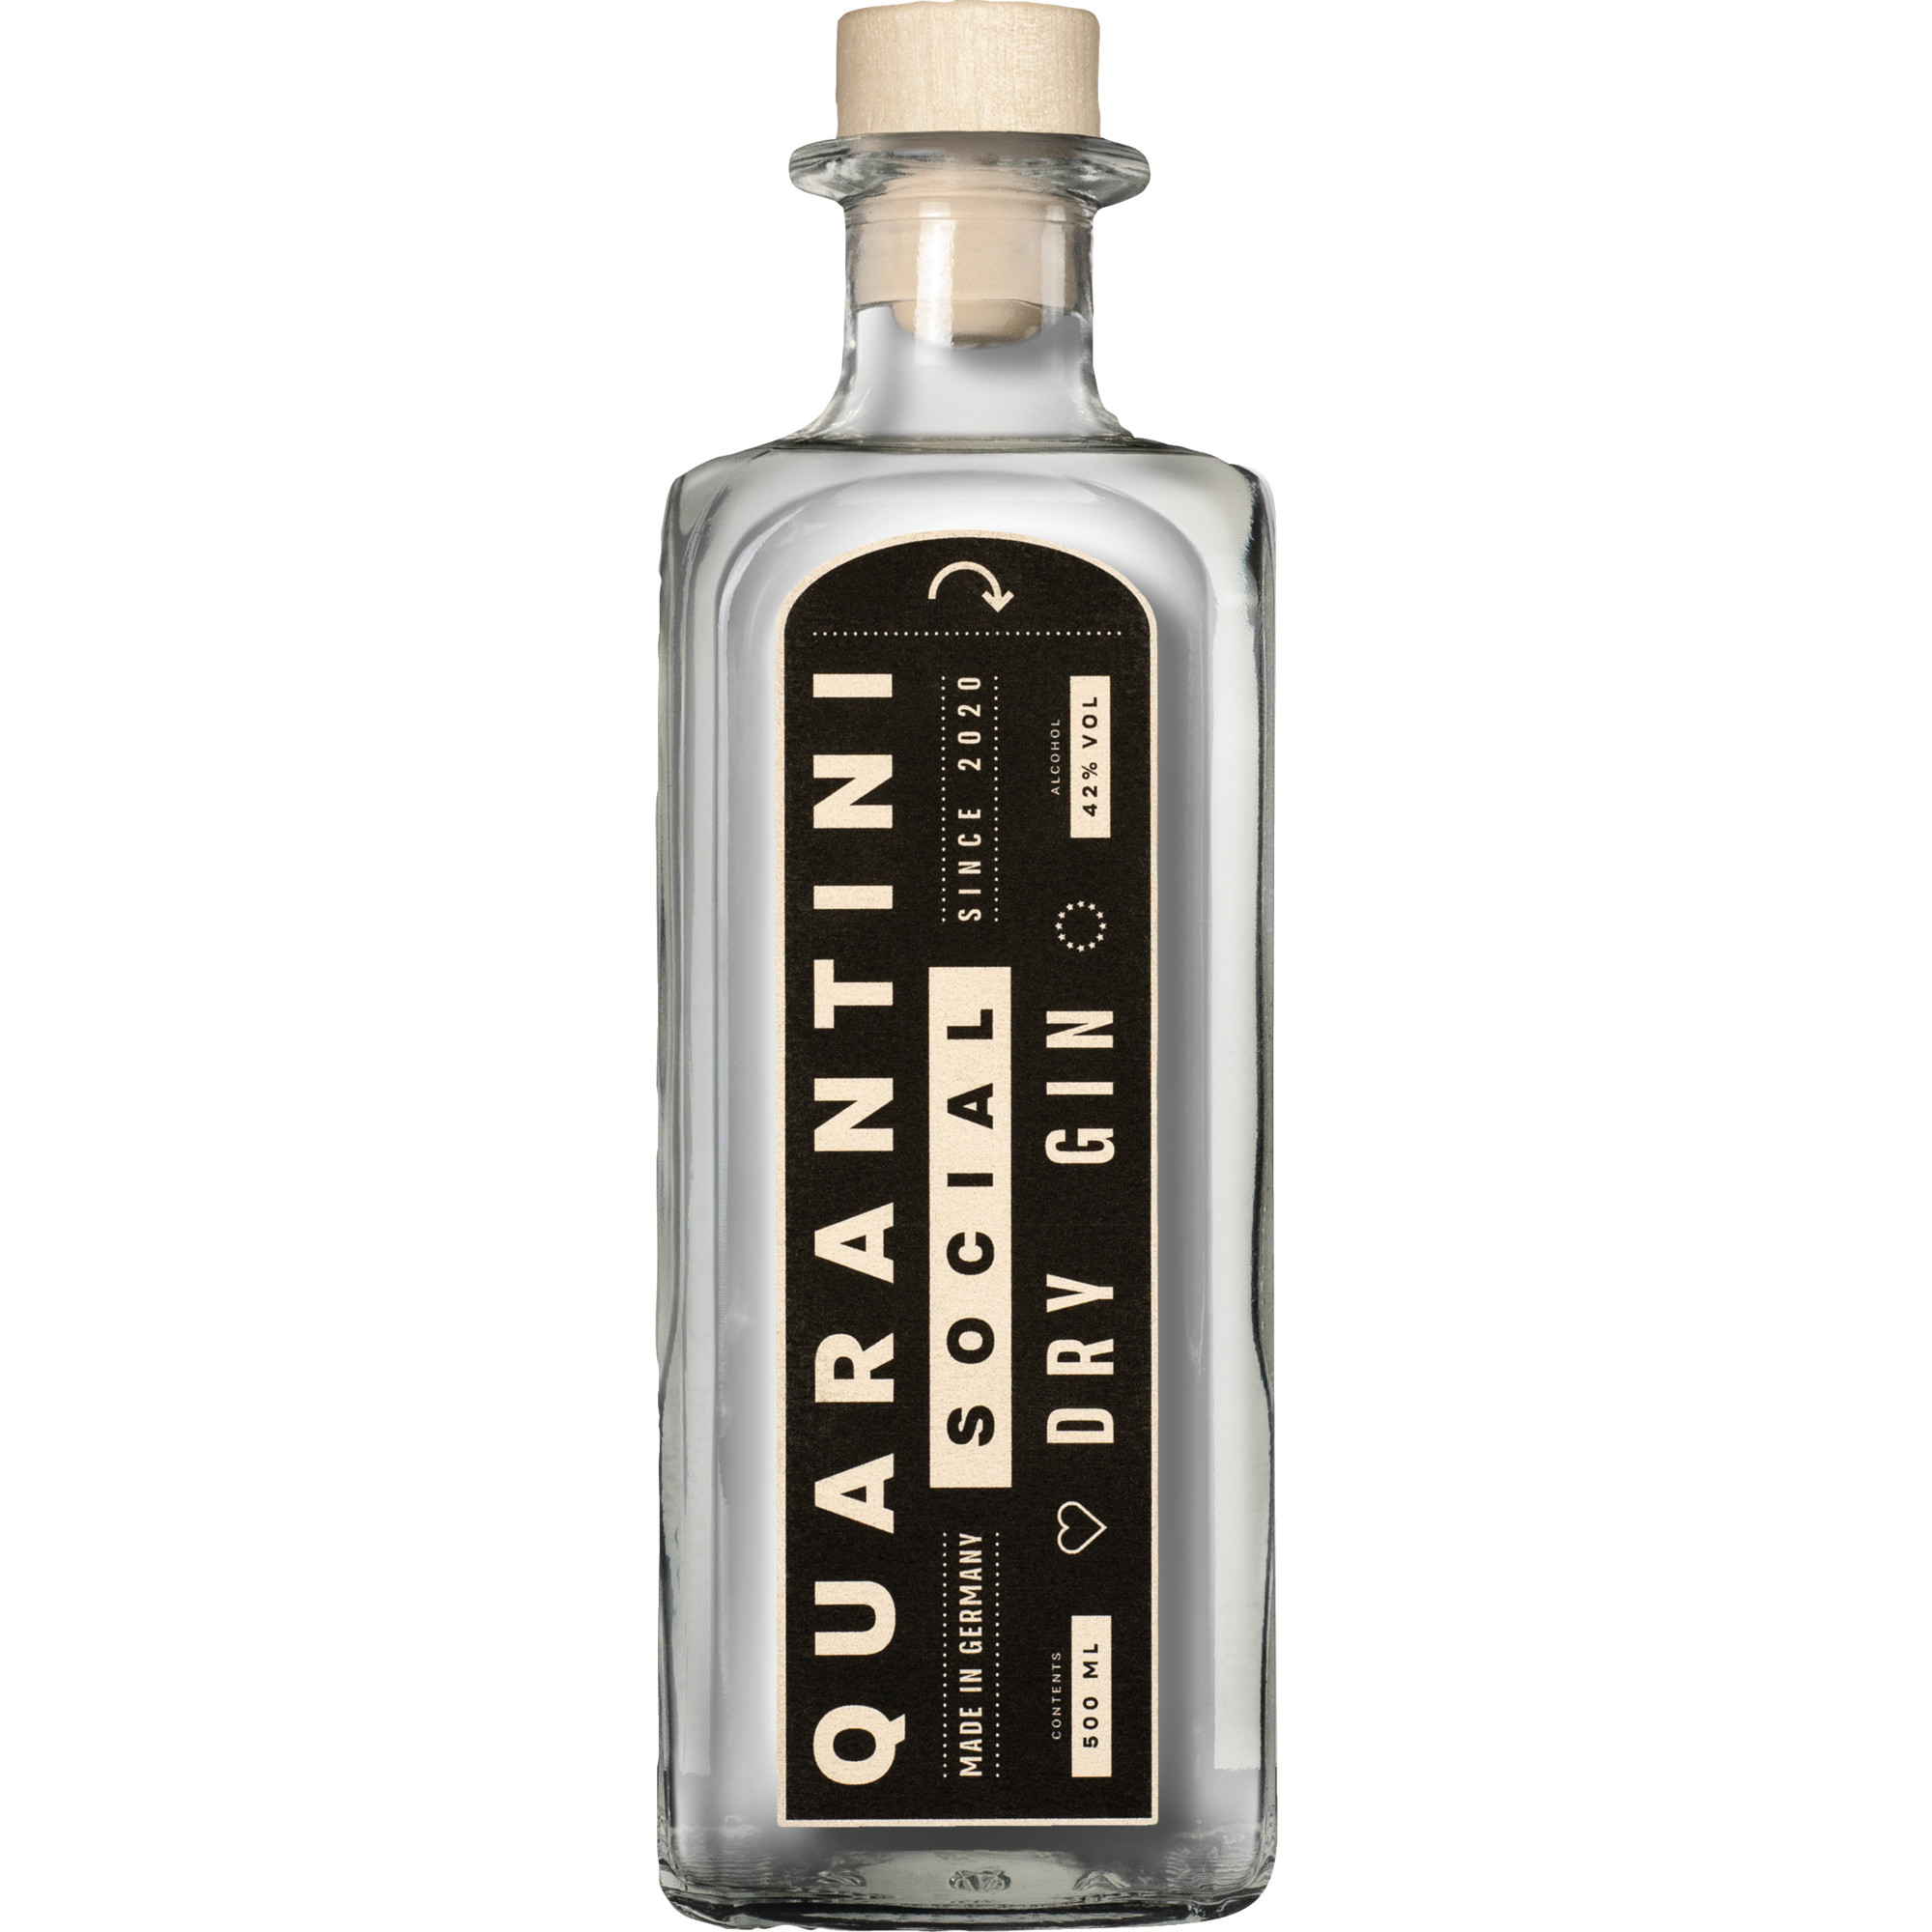 Quarantini Social Dry Gin, 42 % vol. 0,5 L, Spirituosen  Spirituosen Hawesko